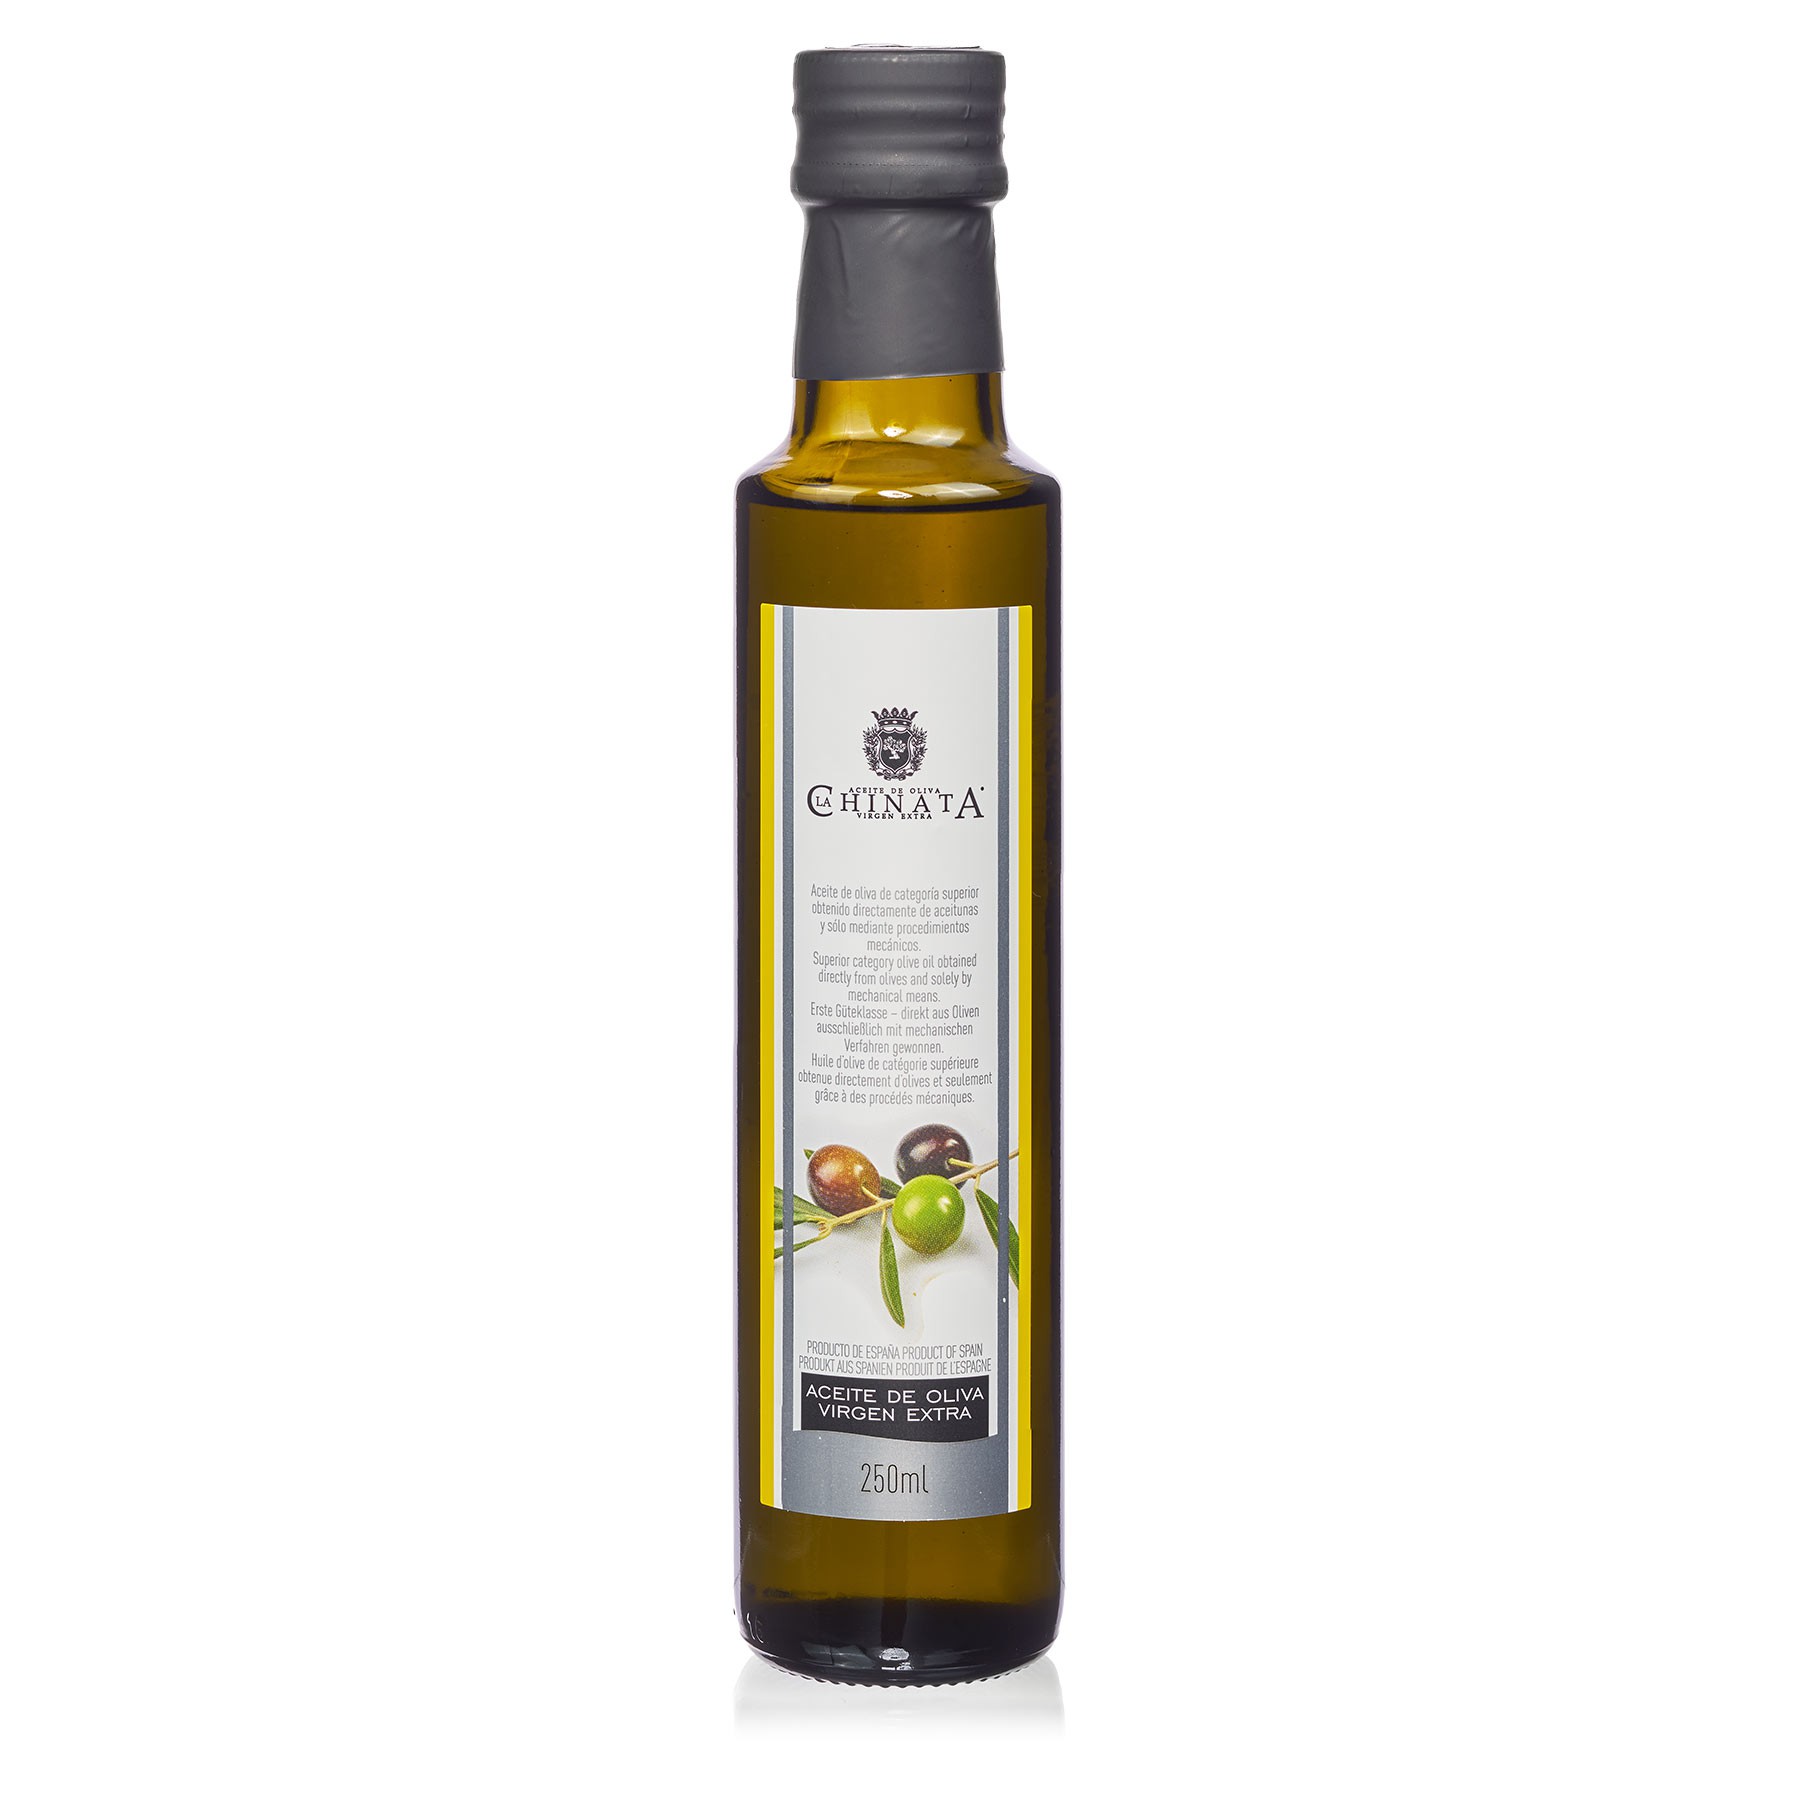 De oliva масло. Оливковое масло aceite de Oliva Virgen Extra. La Mensa оливковое масло 250 мл. Sierra Olive Extra Virgin. Масло оливковое Маркес де вальдуэ 250 мл..